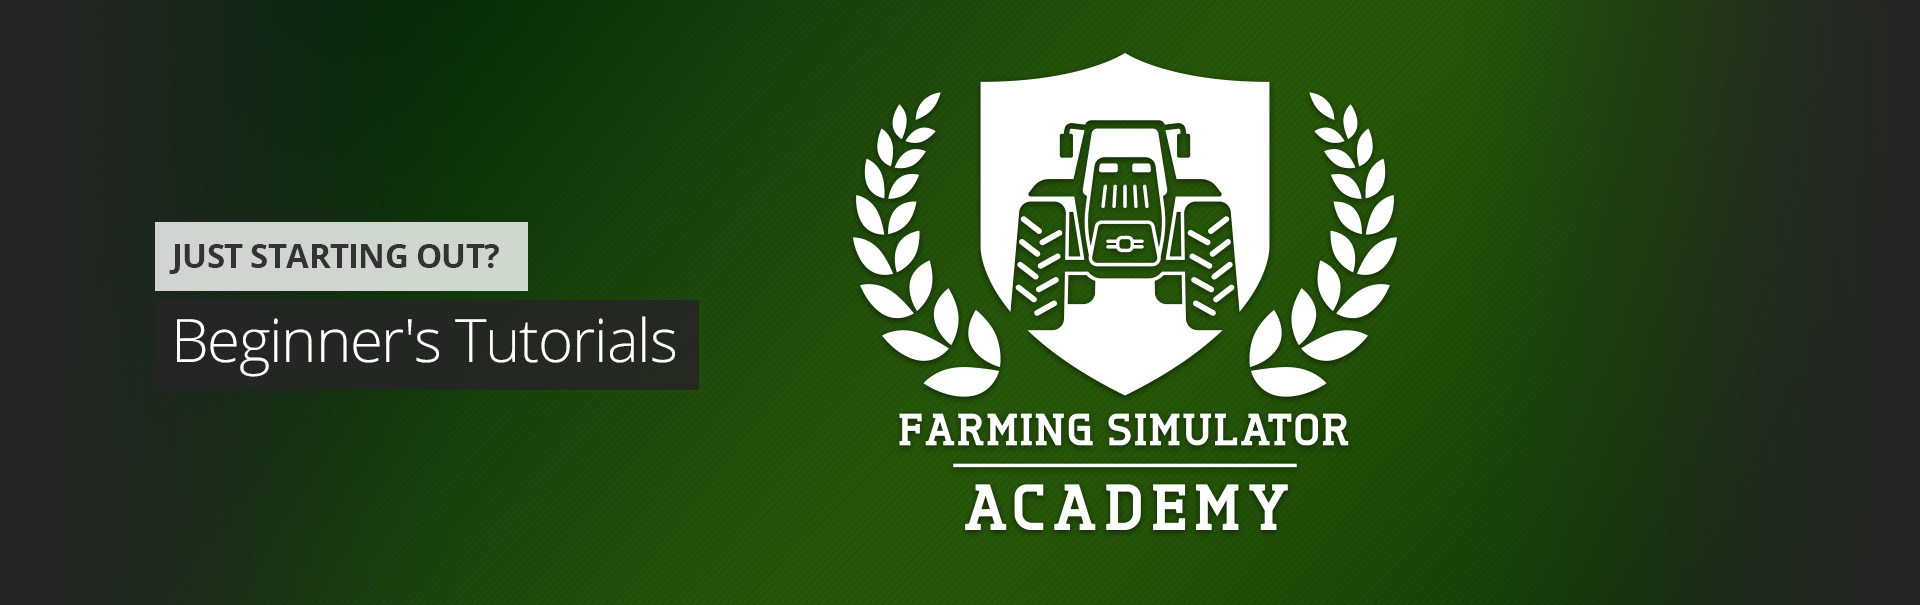 Farming Simulator Academy